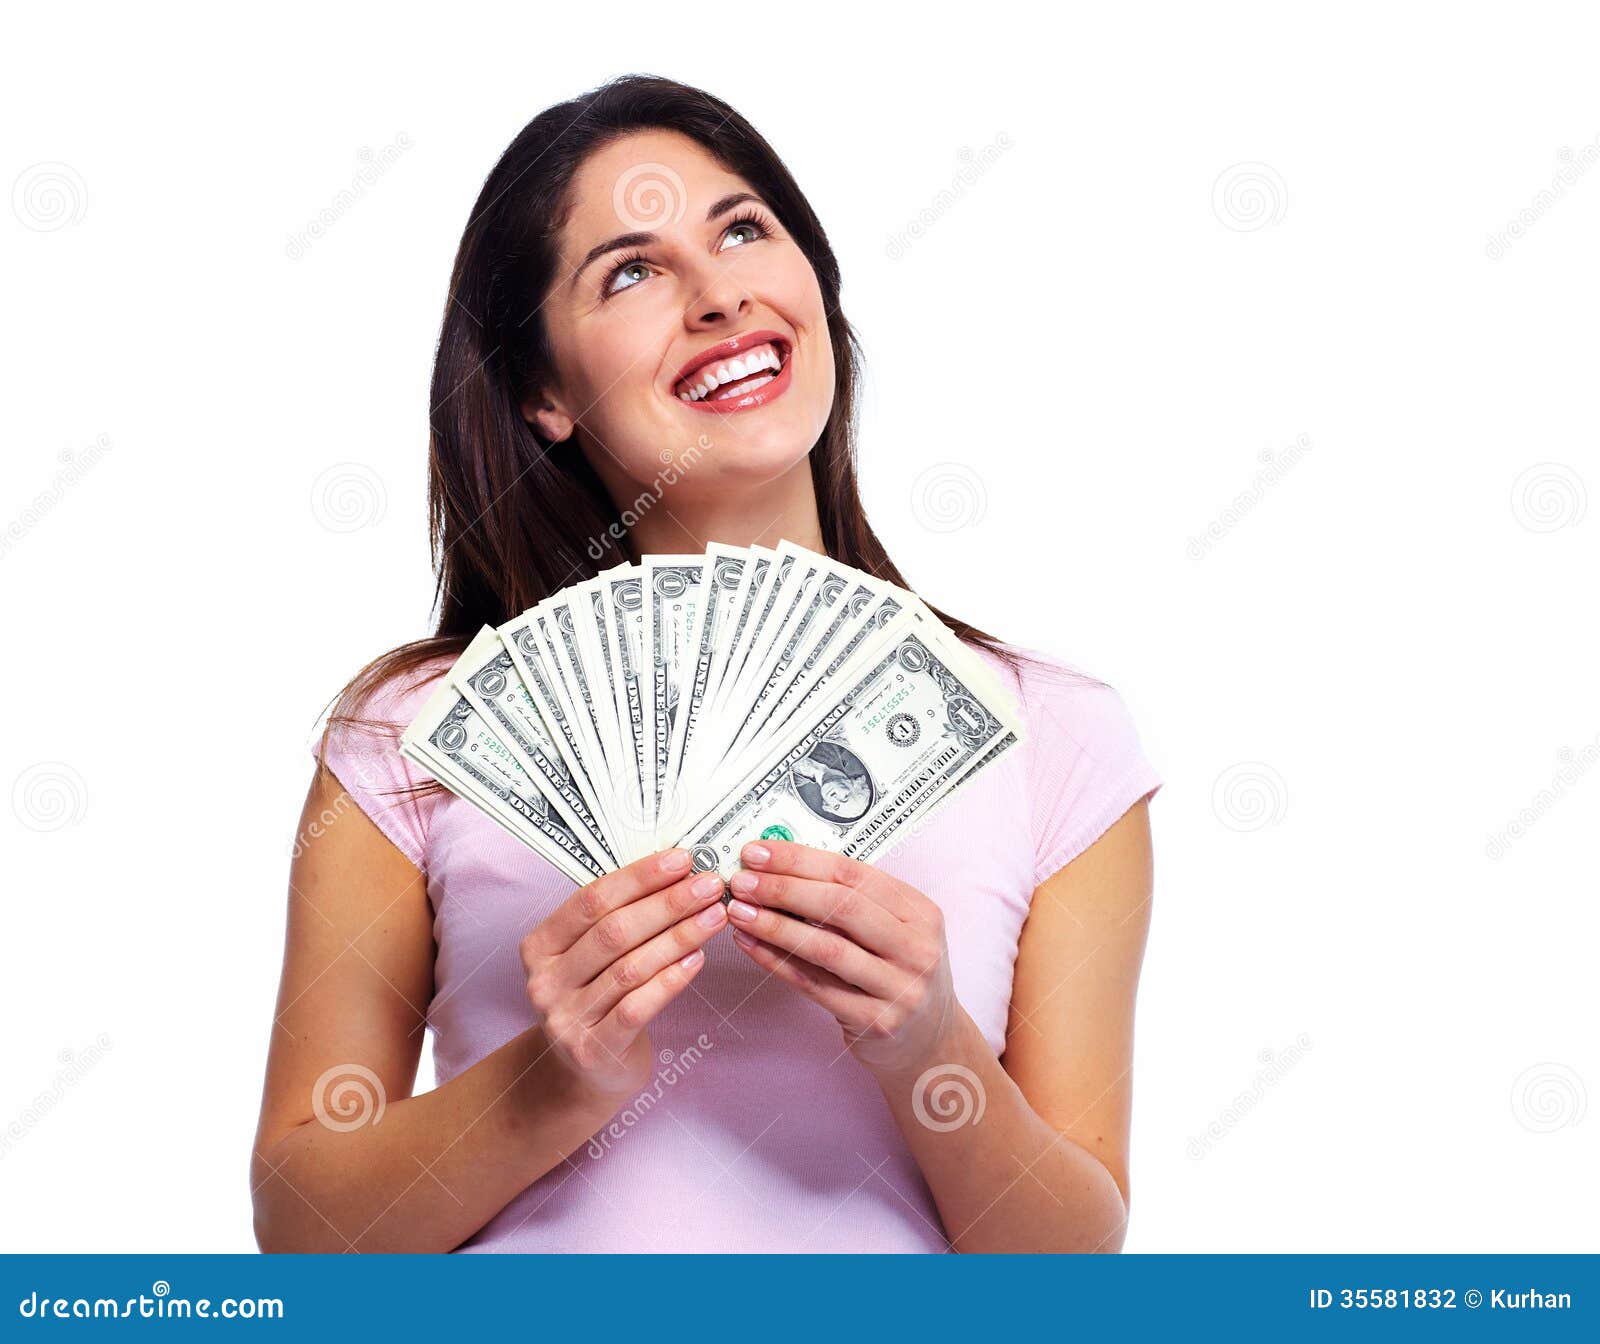 Woman holding money stock photo. Image of banknotes, background - 35581832